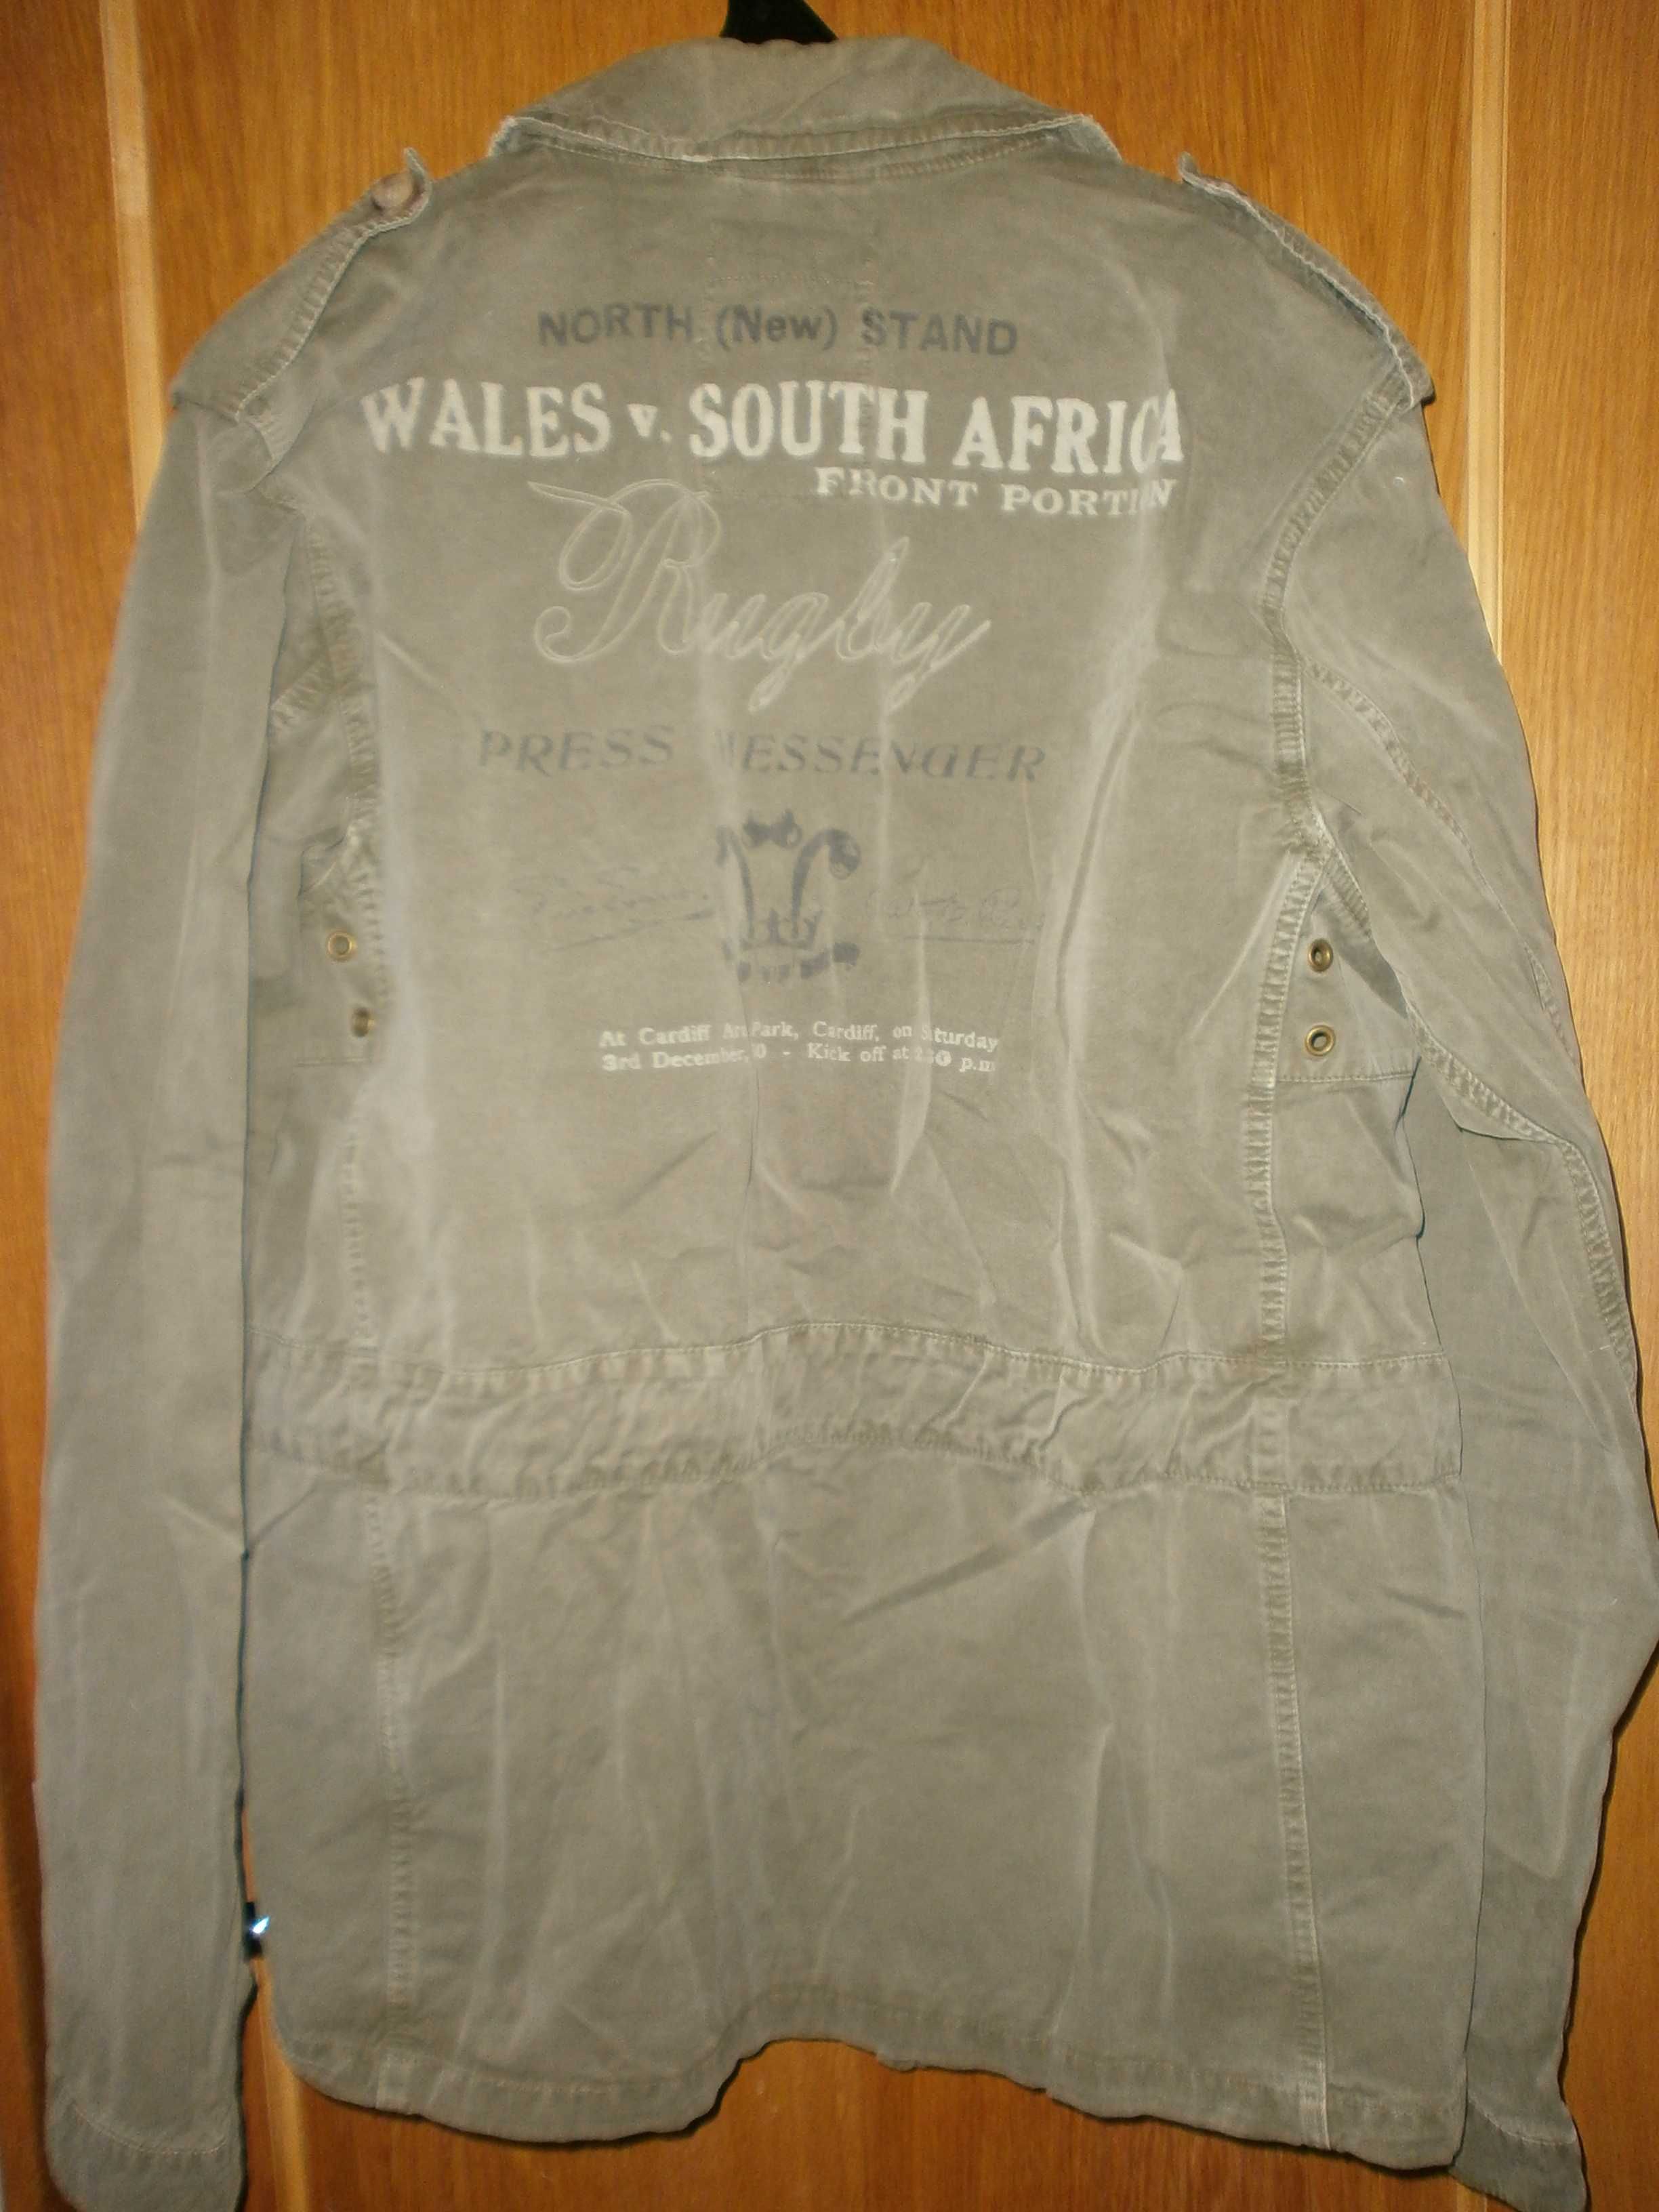 Куртка ветровка тип М65 Scotch&Soda, олива, XXL, наш 54-56. ПОГ-62 см